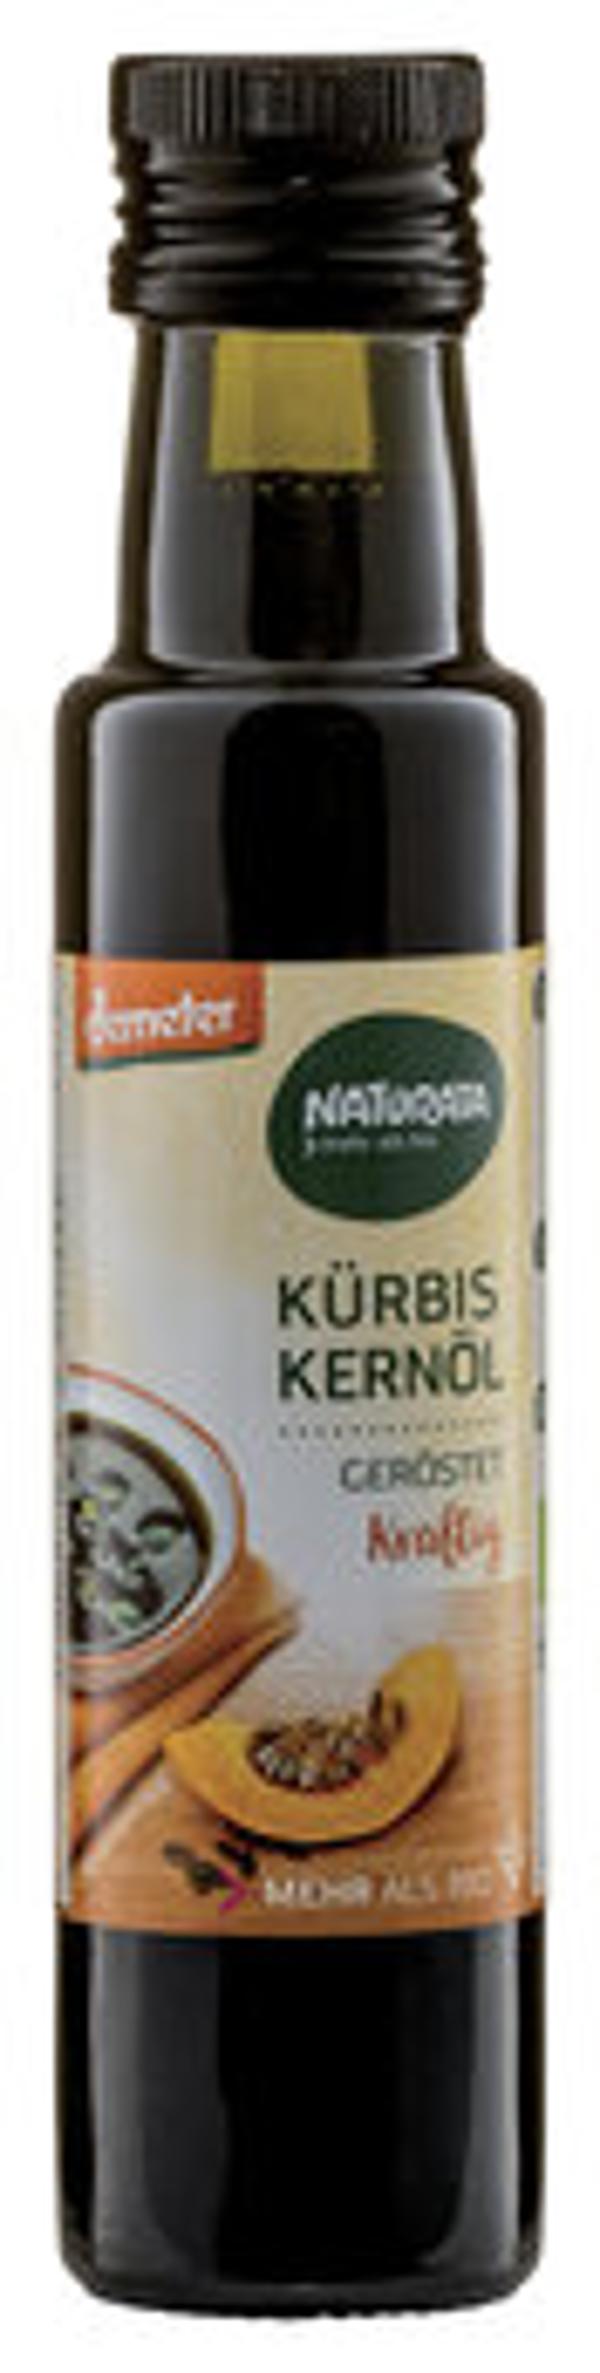 Produktbild von Naturata Kürbiskernöl geröstet 100ml